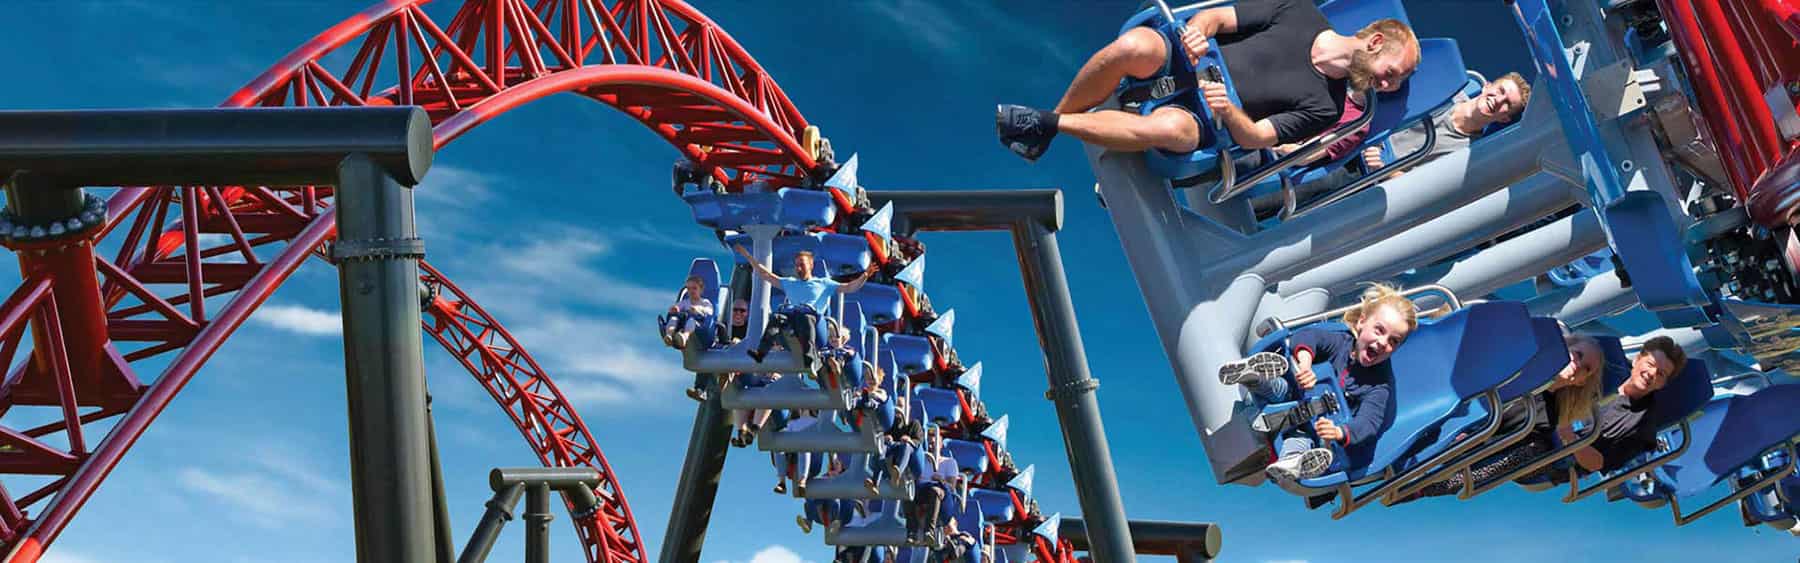 Roller coaster ride through release processes<br/> 